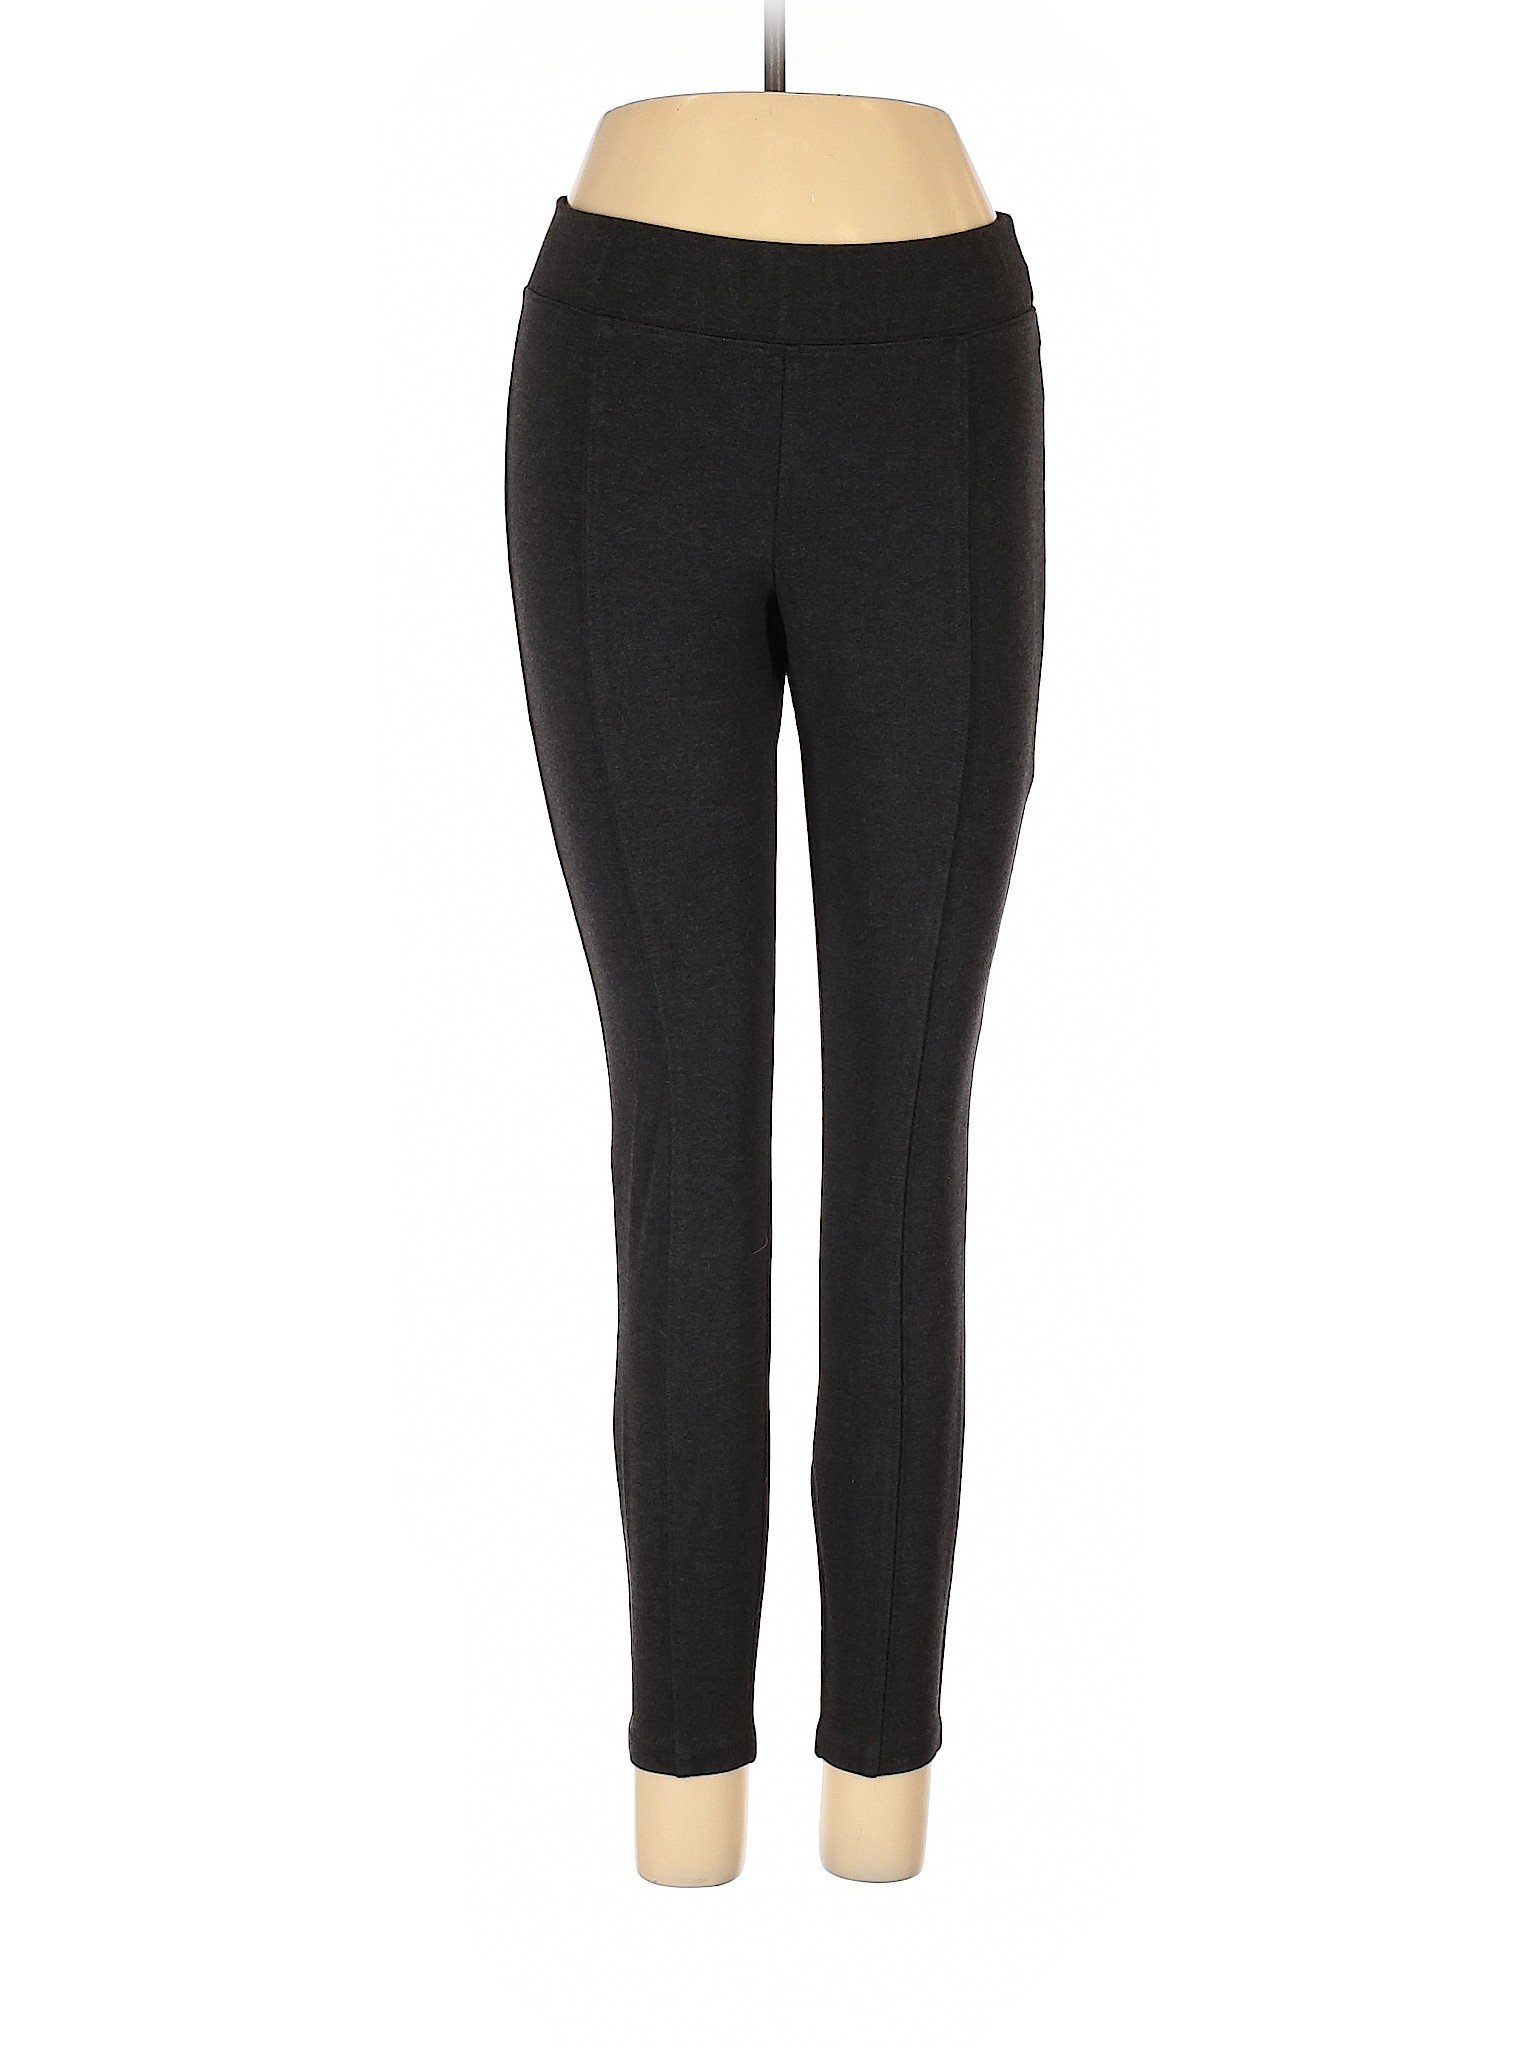 Old Navy Women Black Casual Pants S | eBay